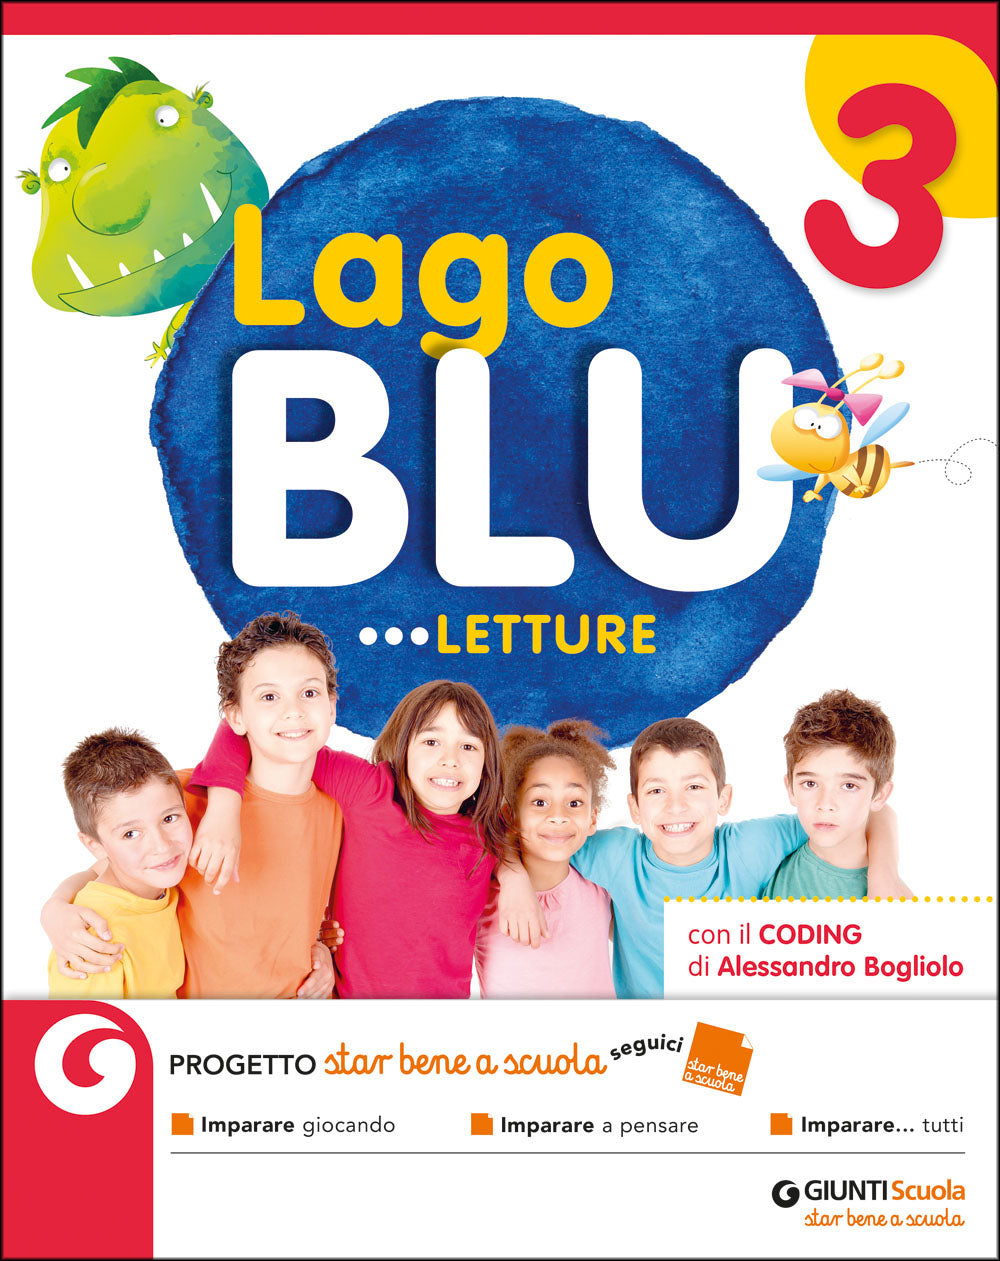 Lago Blu 3 - Letture. Lago Blu 3 - Letture